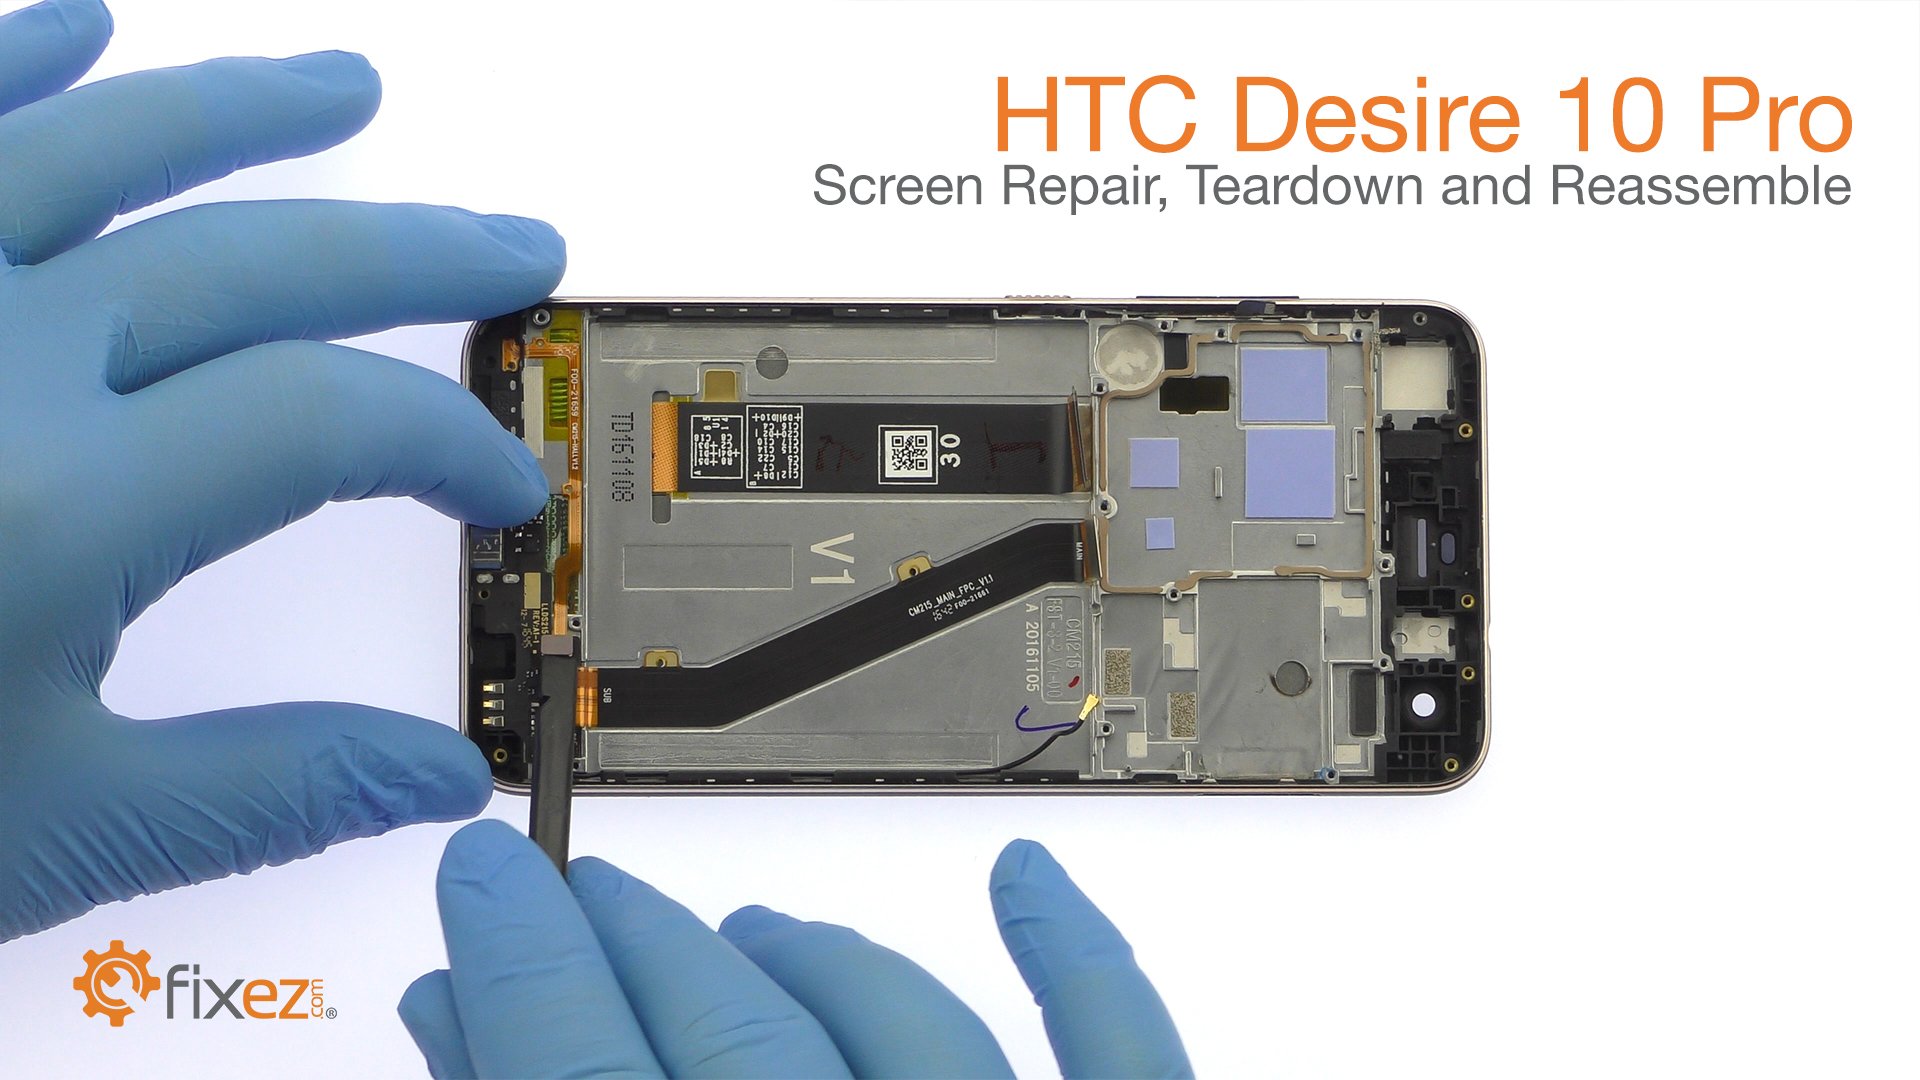 HTC Desire 10 Pro Screen Repair, Teardown and Reassemble